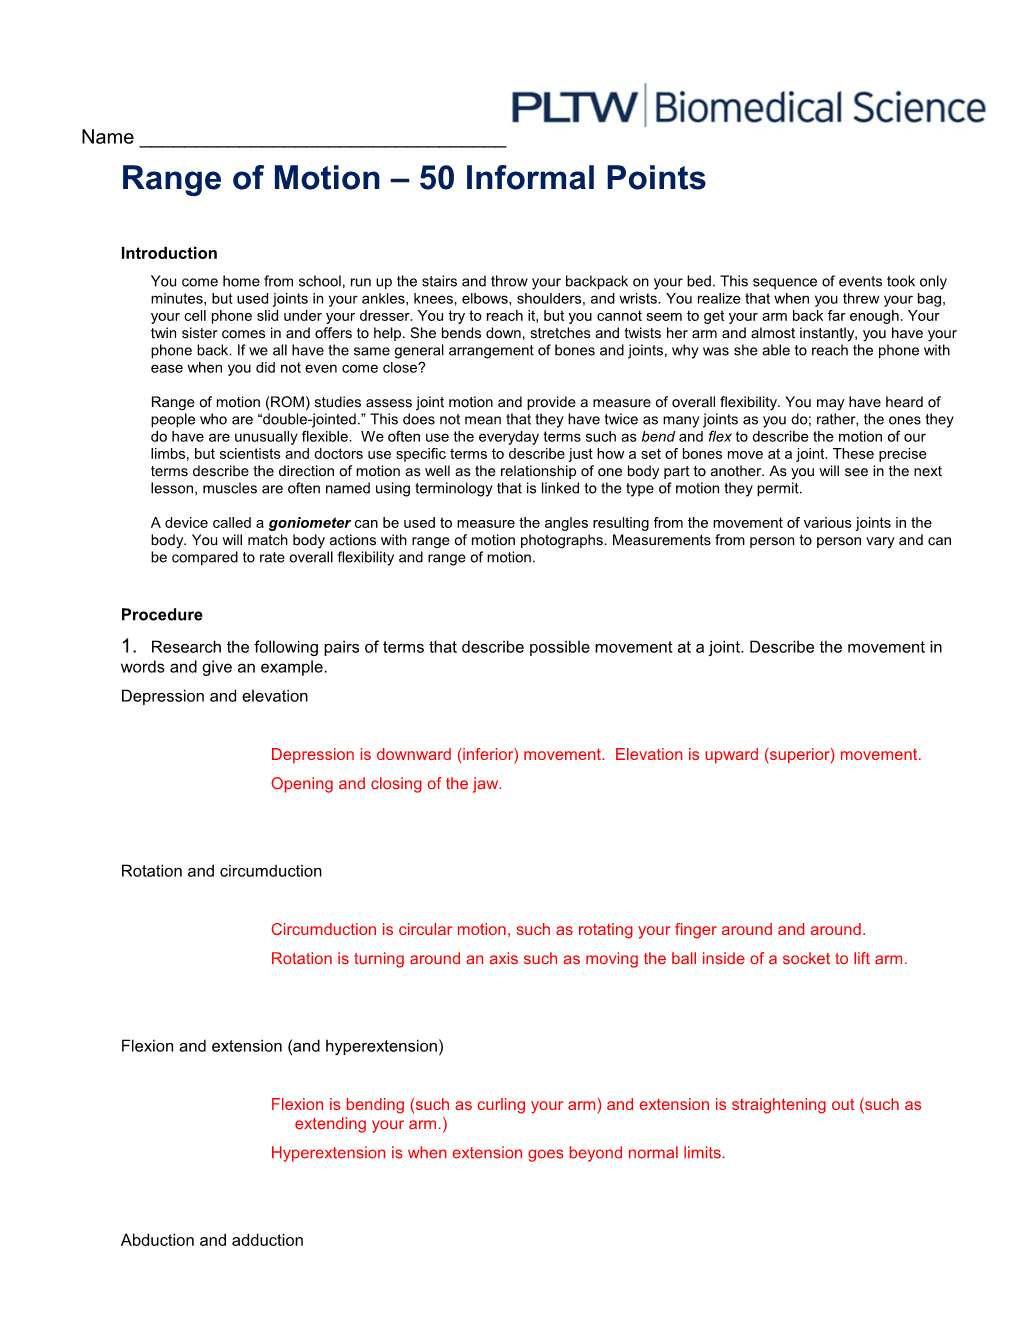 Range of Motion 50 Informal Points